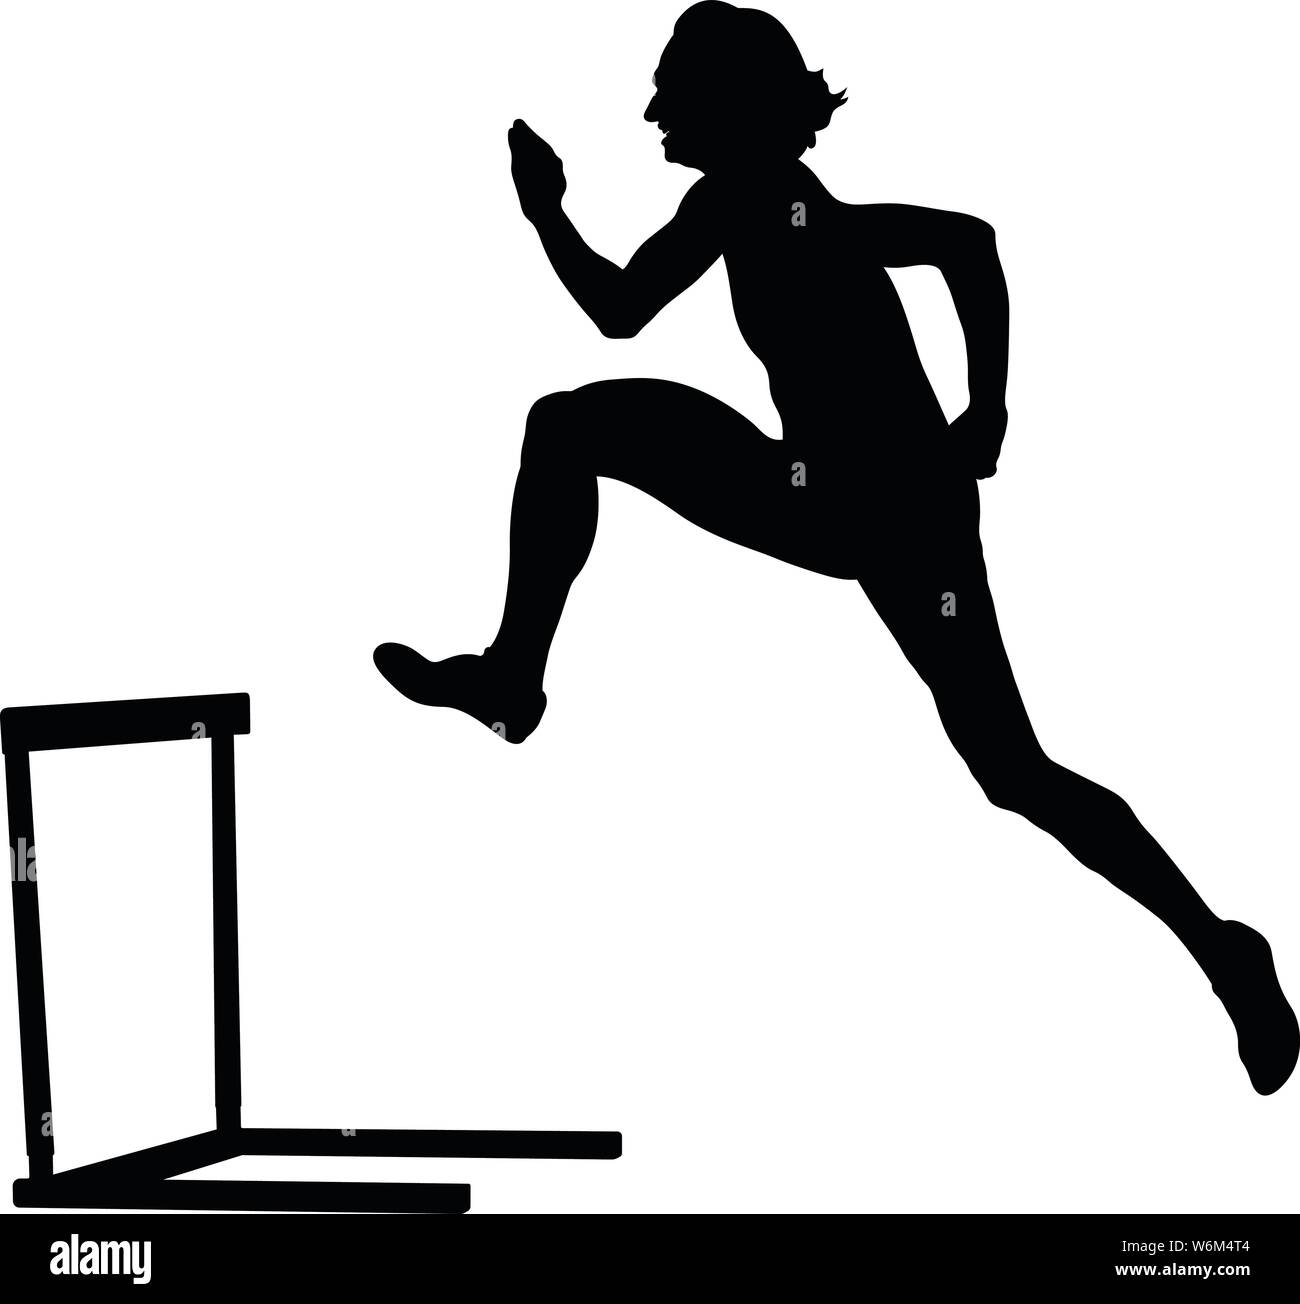 women athlete running 400 meter hurdles black silhouette Stock Vector